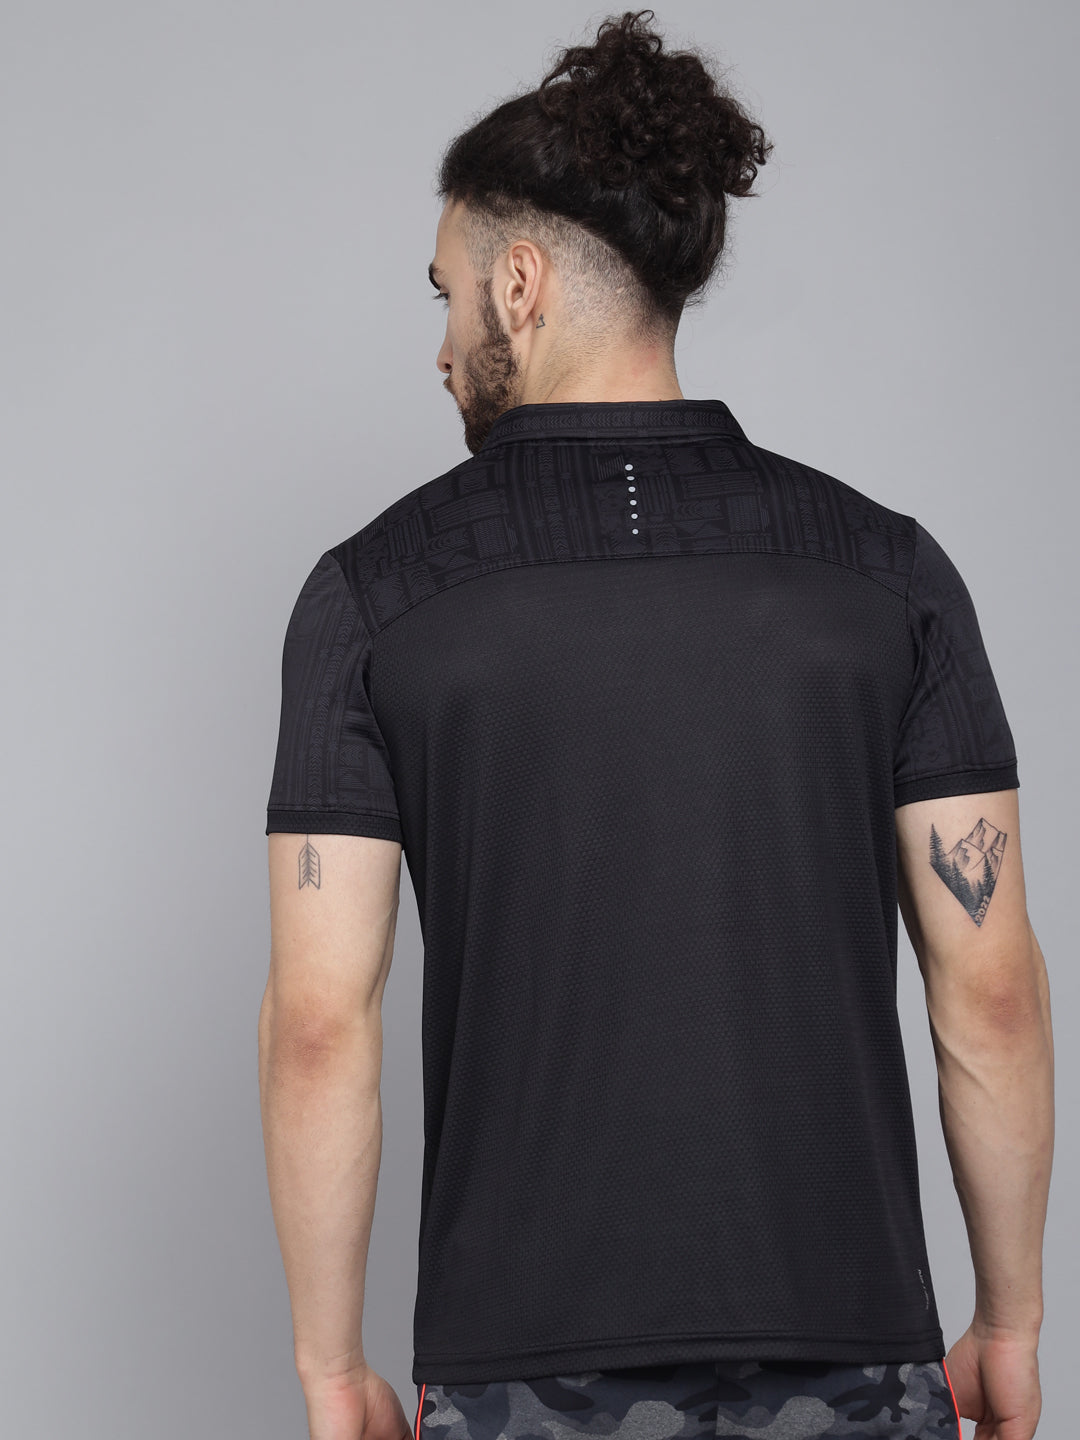 Black Reflective Polo Neck Half sleeves T-Shirt